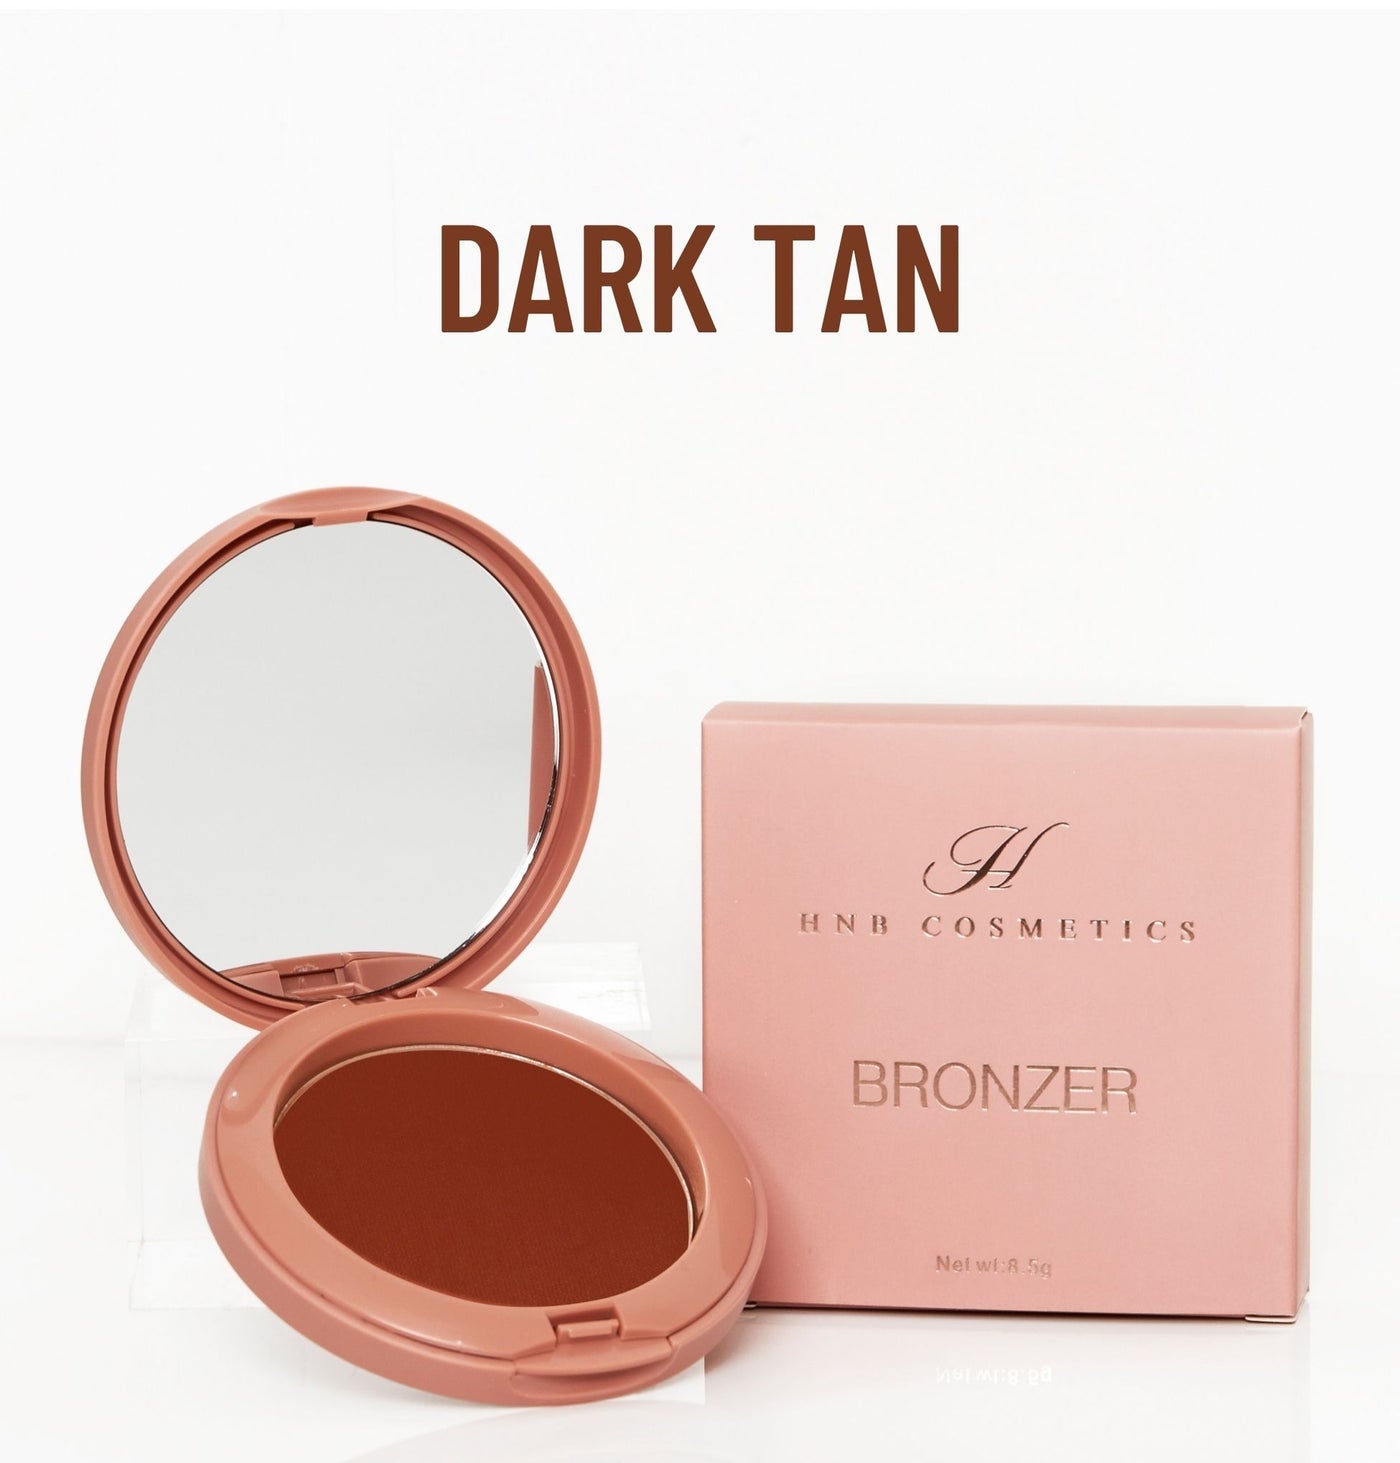 HNB Cosmetics - Bronzer